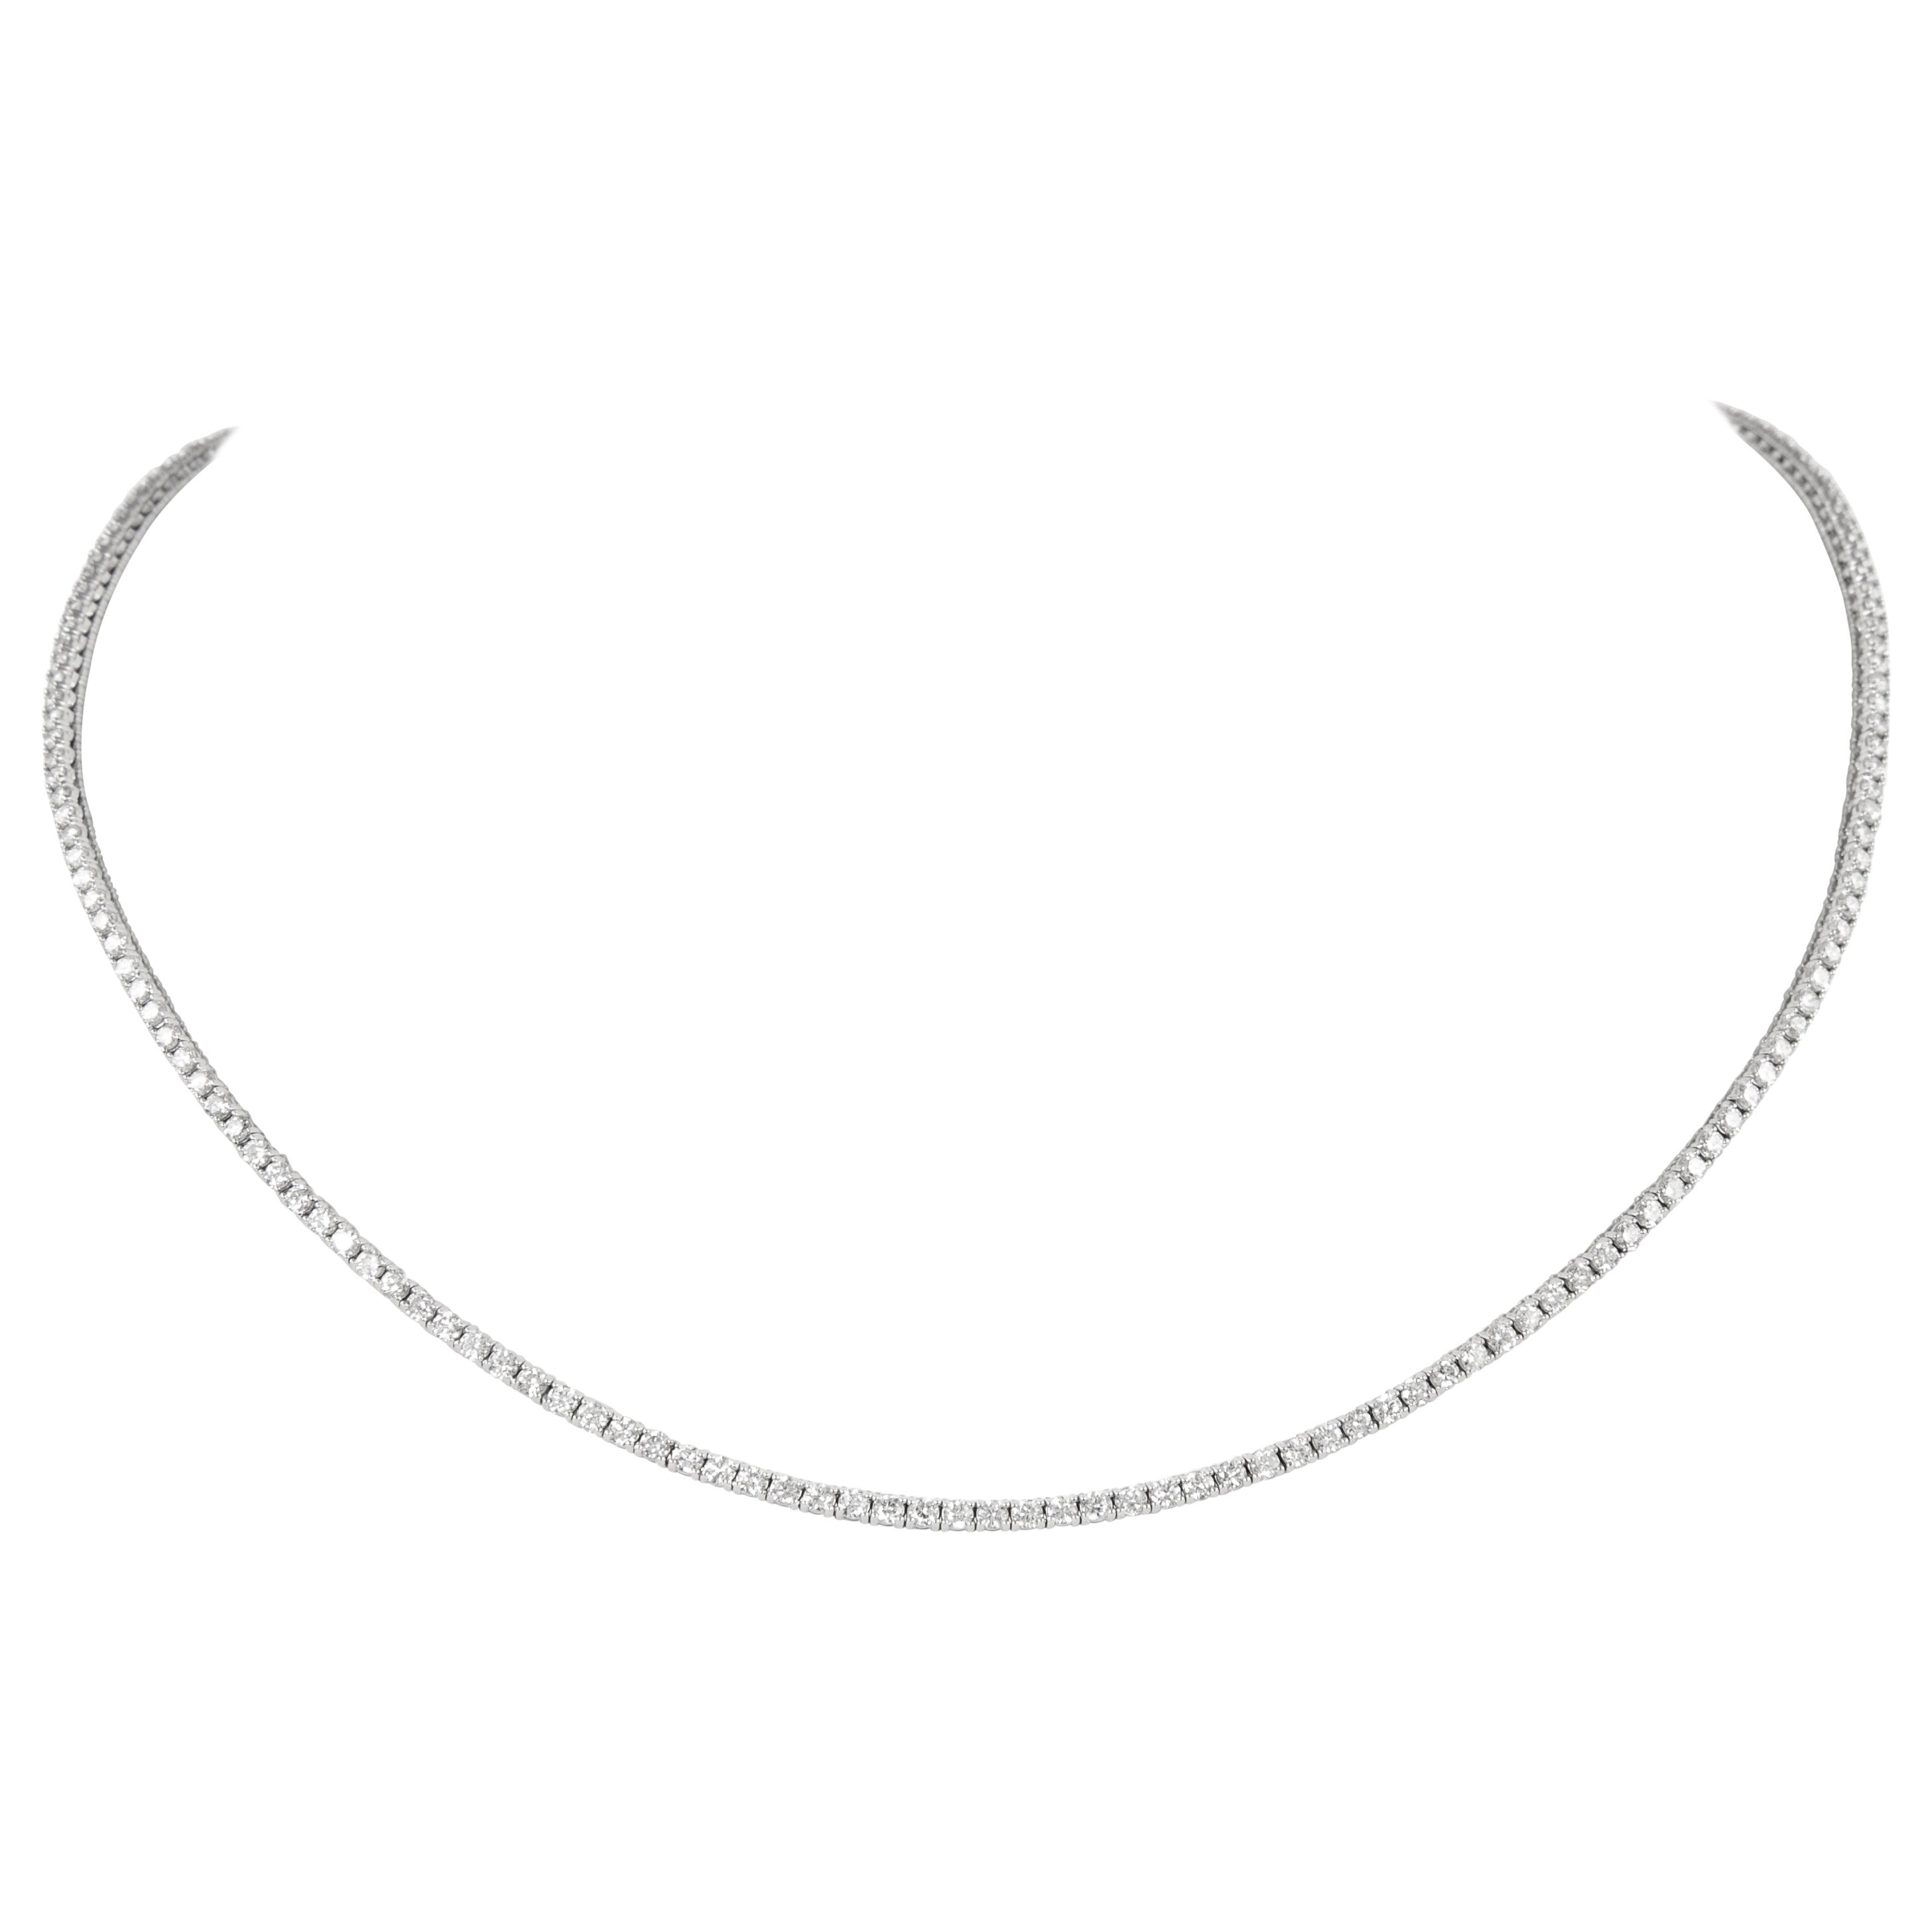 Alexander 5.09 Carat Diamond Tennis Necklace 18 Karat White Gold